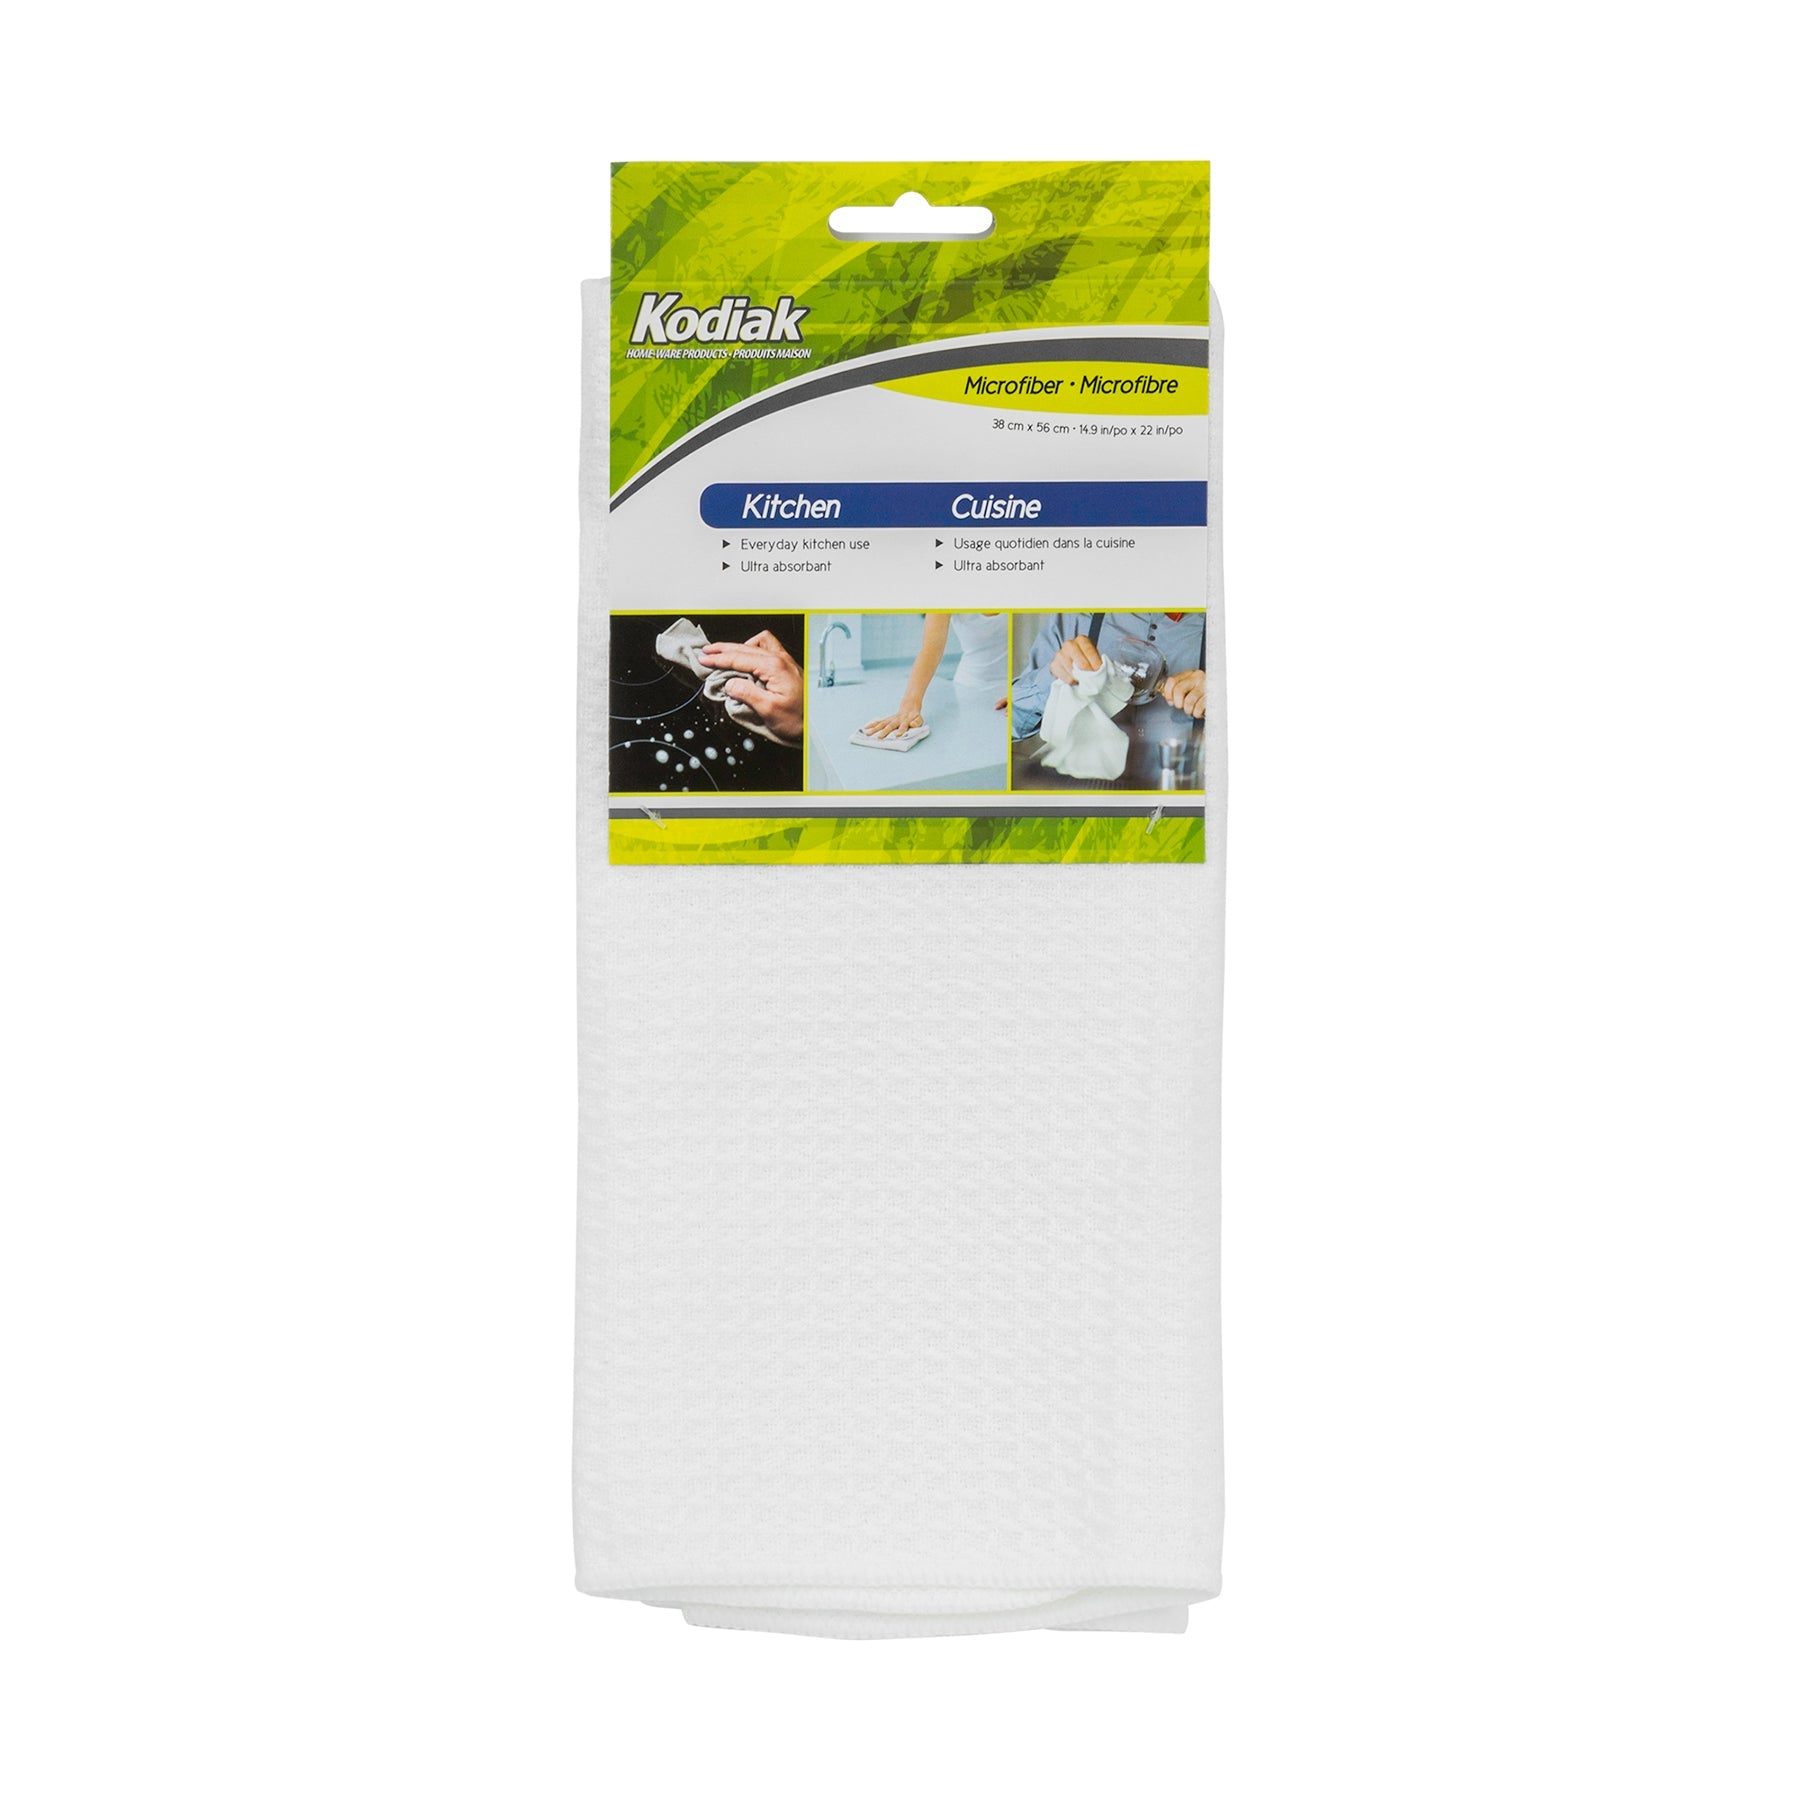 Kodiak Microfiber White Kitchen Cloth 14.9x22in